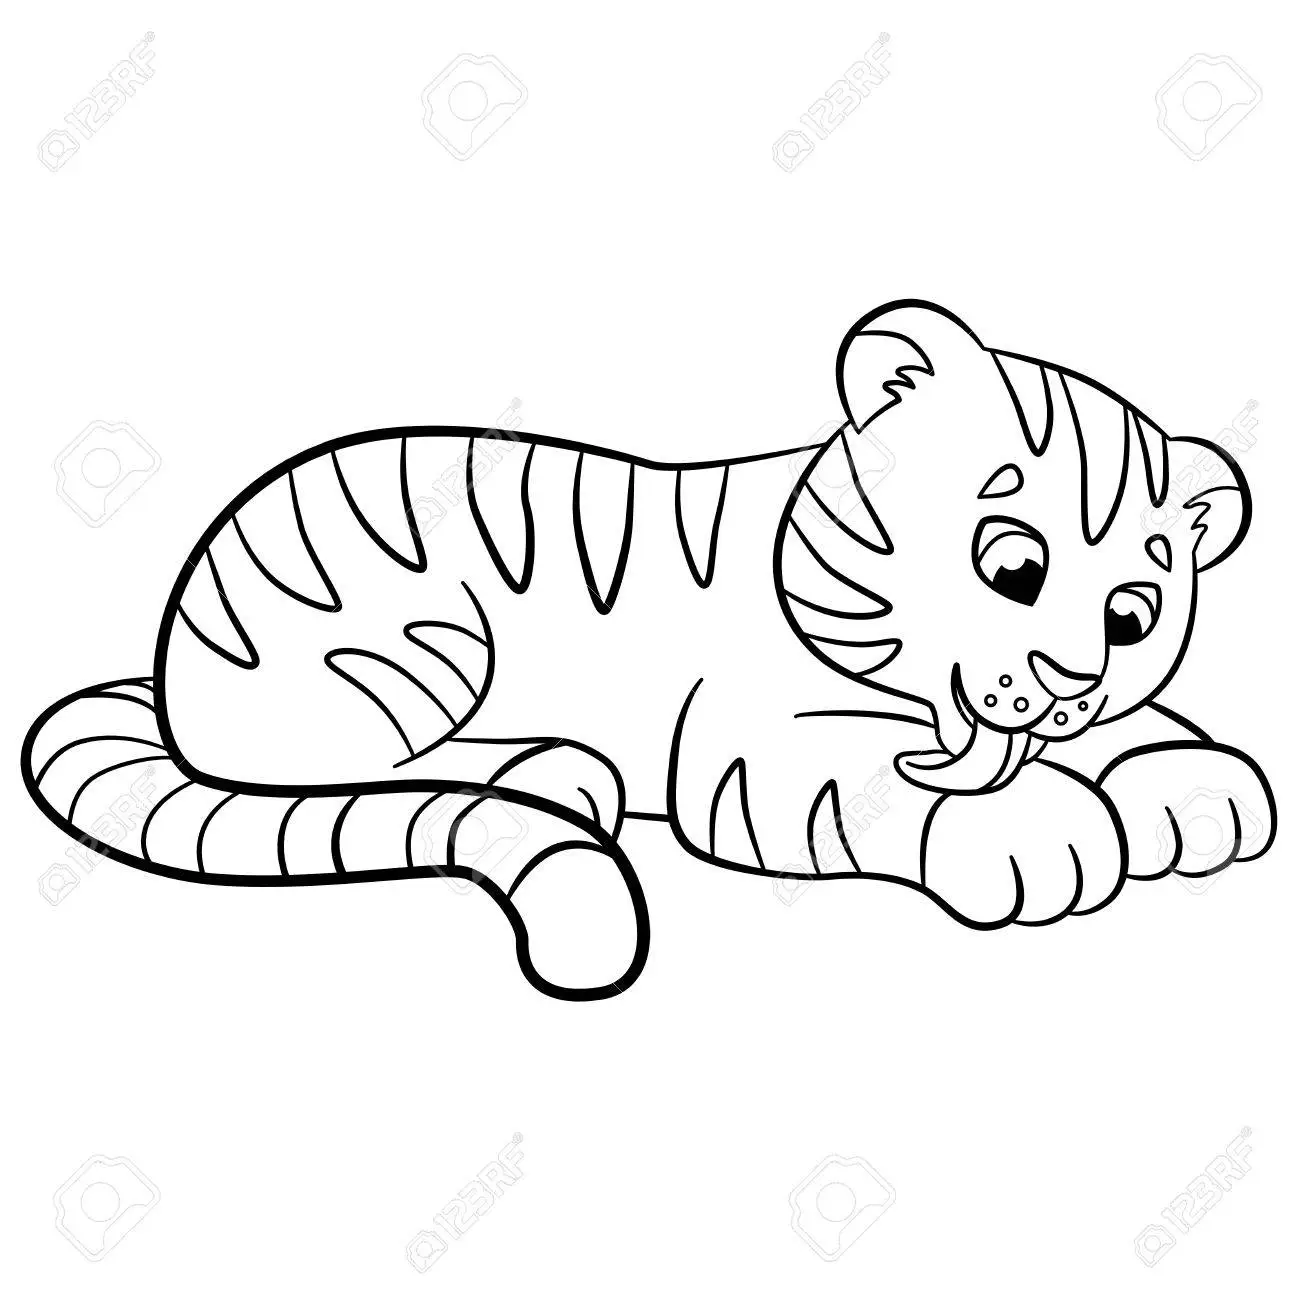 Раскраски двух тигрят для детей